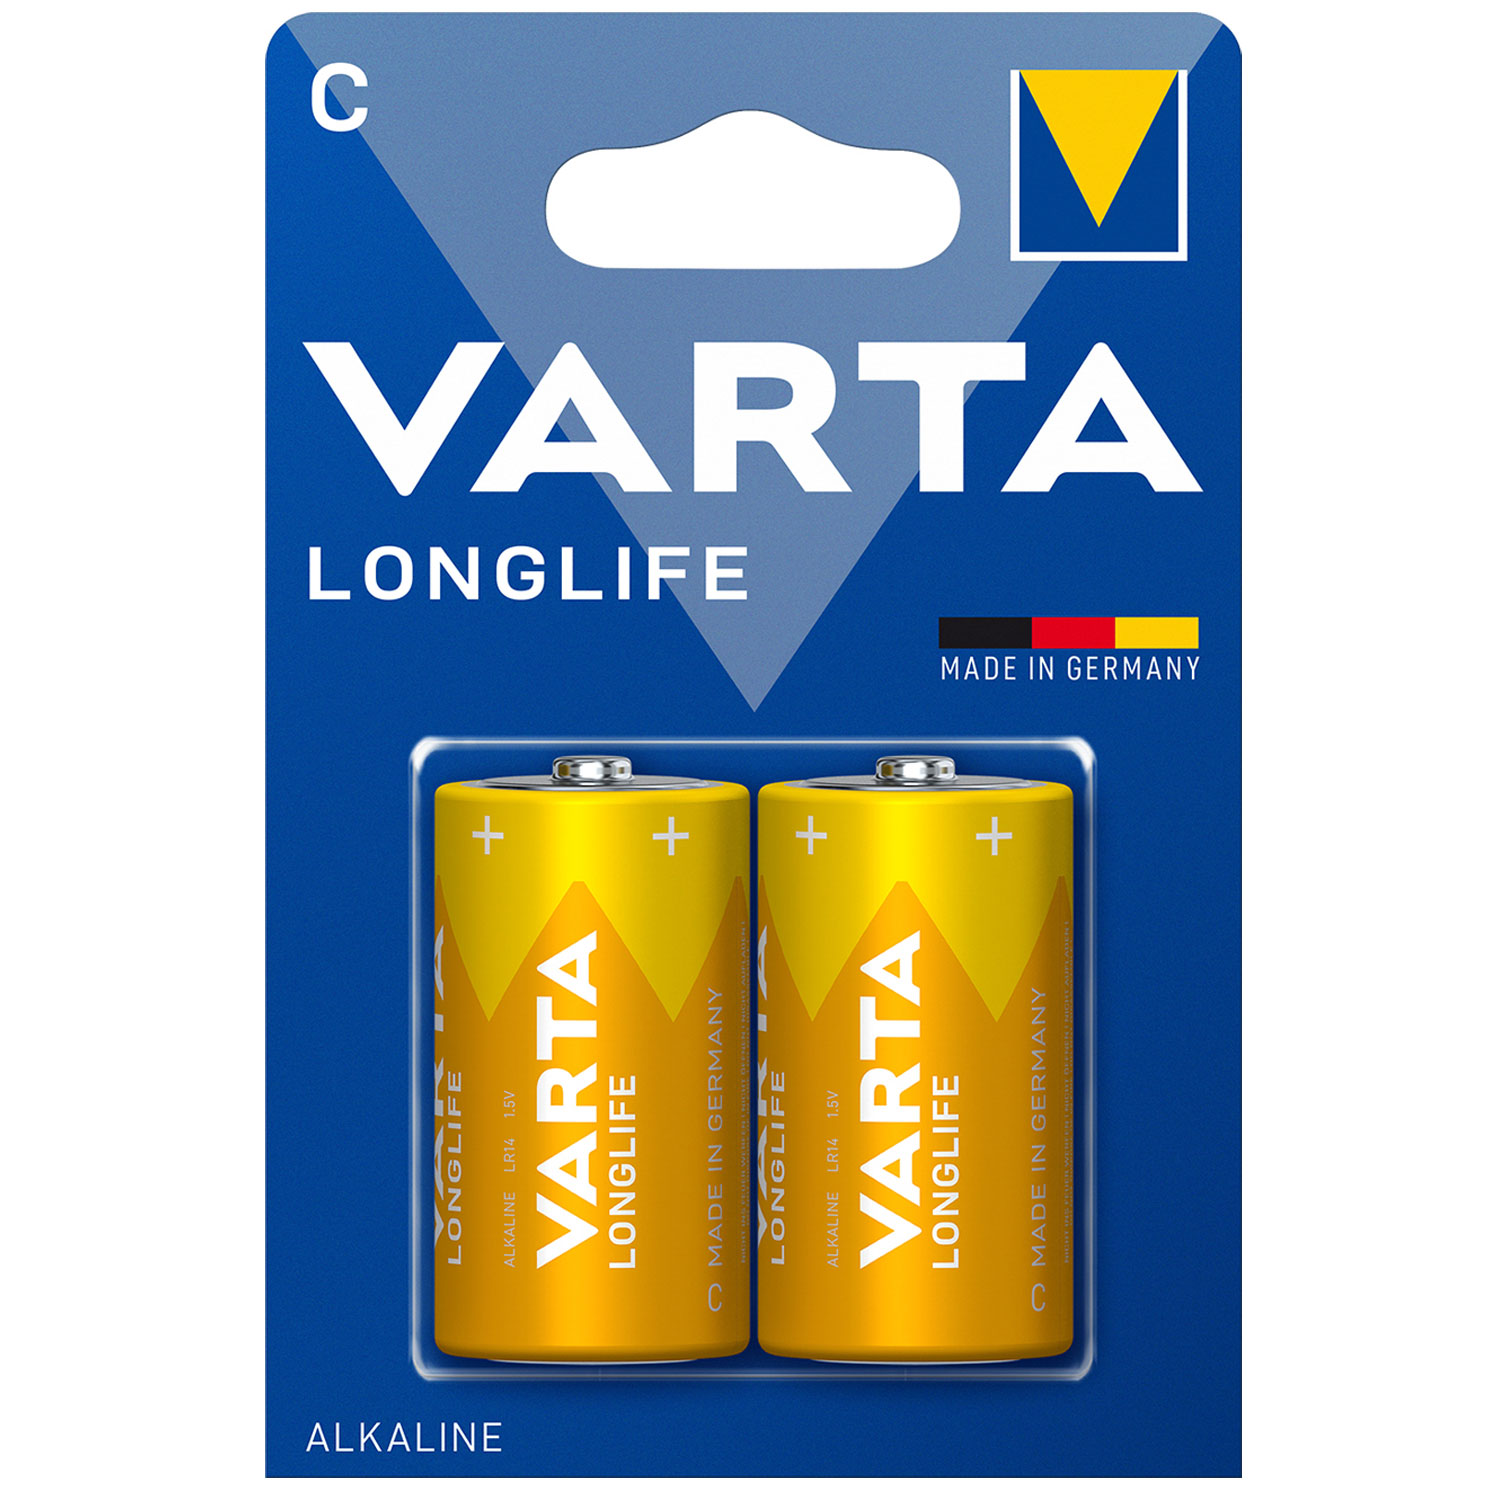 Varta Baby Batterie 4114 Longlife - 2 Stück im Blister